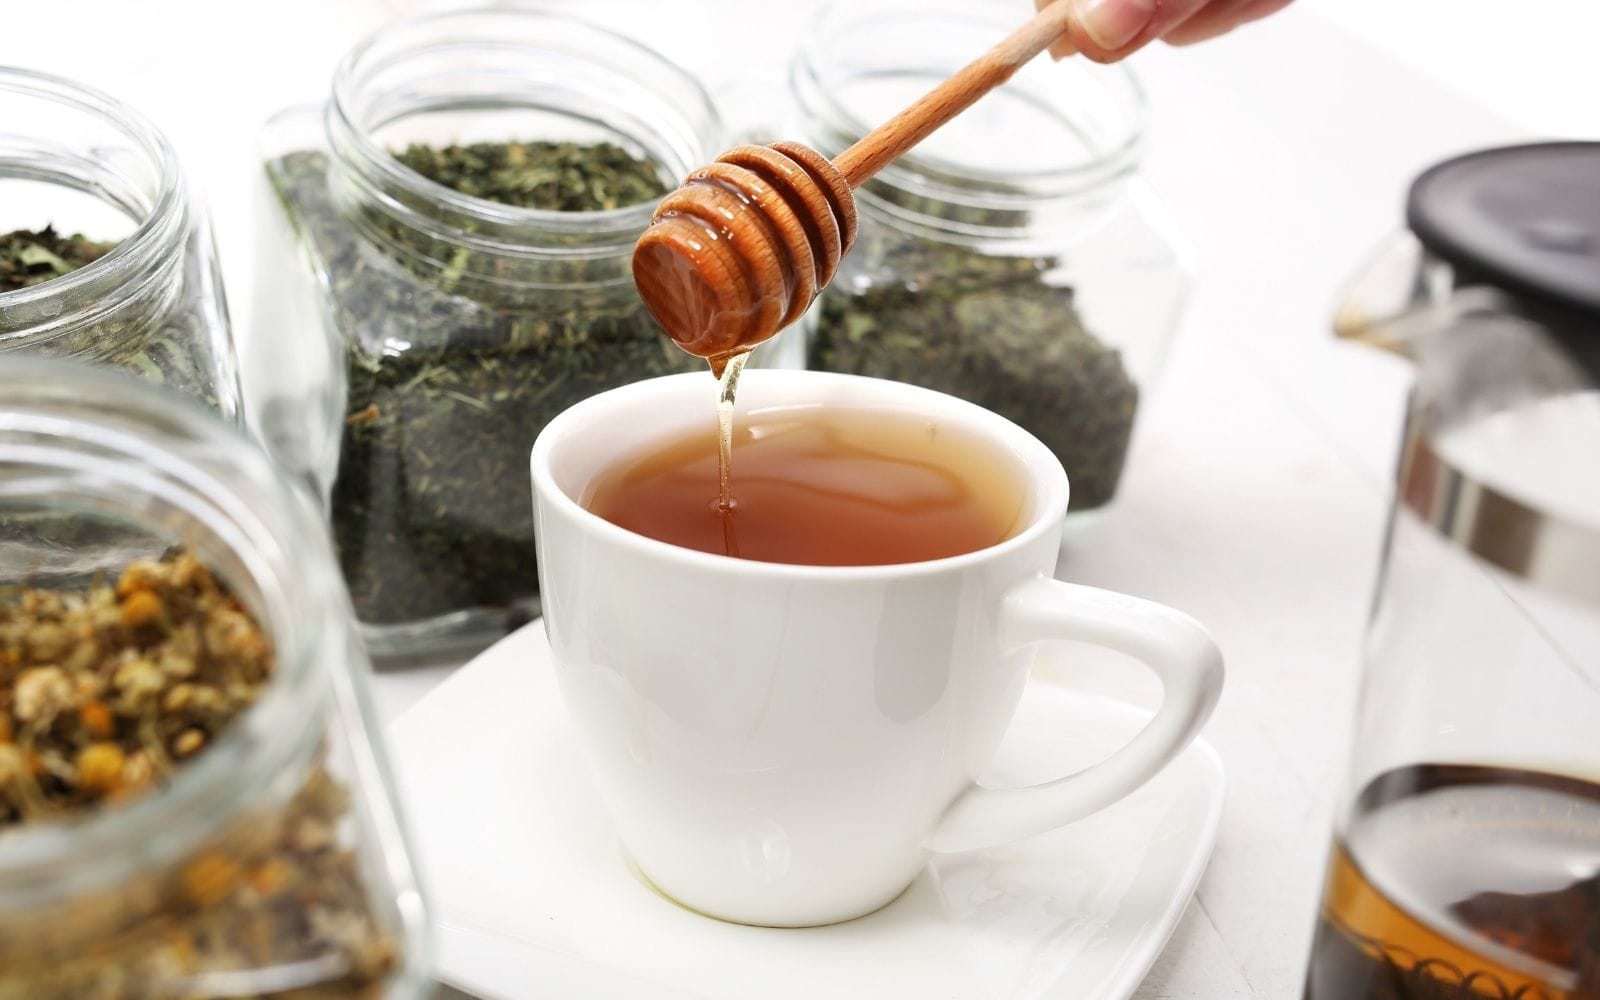 11 Tasty Alternative Ways To Sweeten Tea Without Sugar